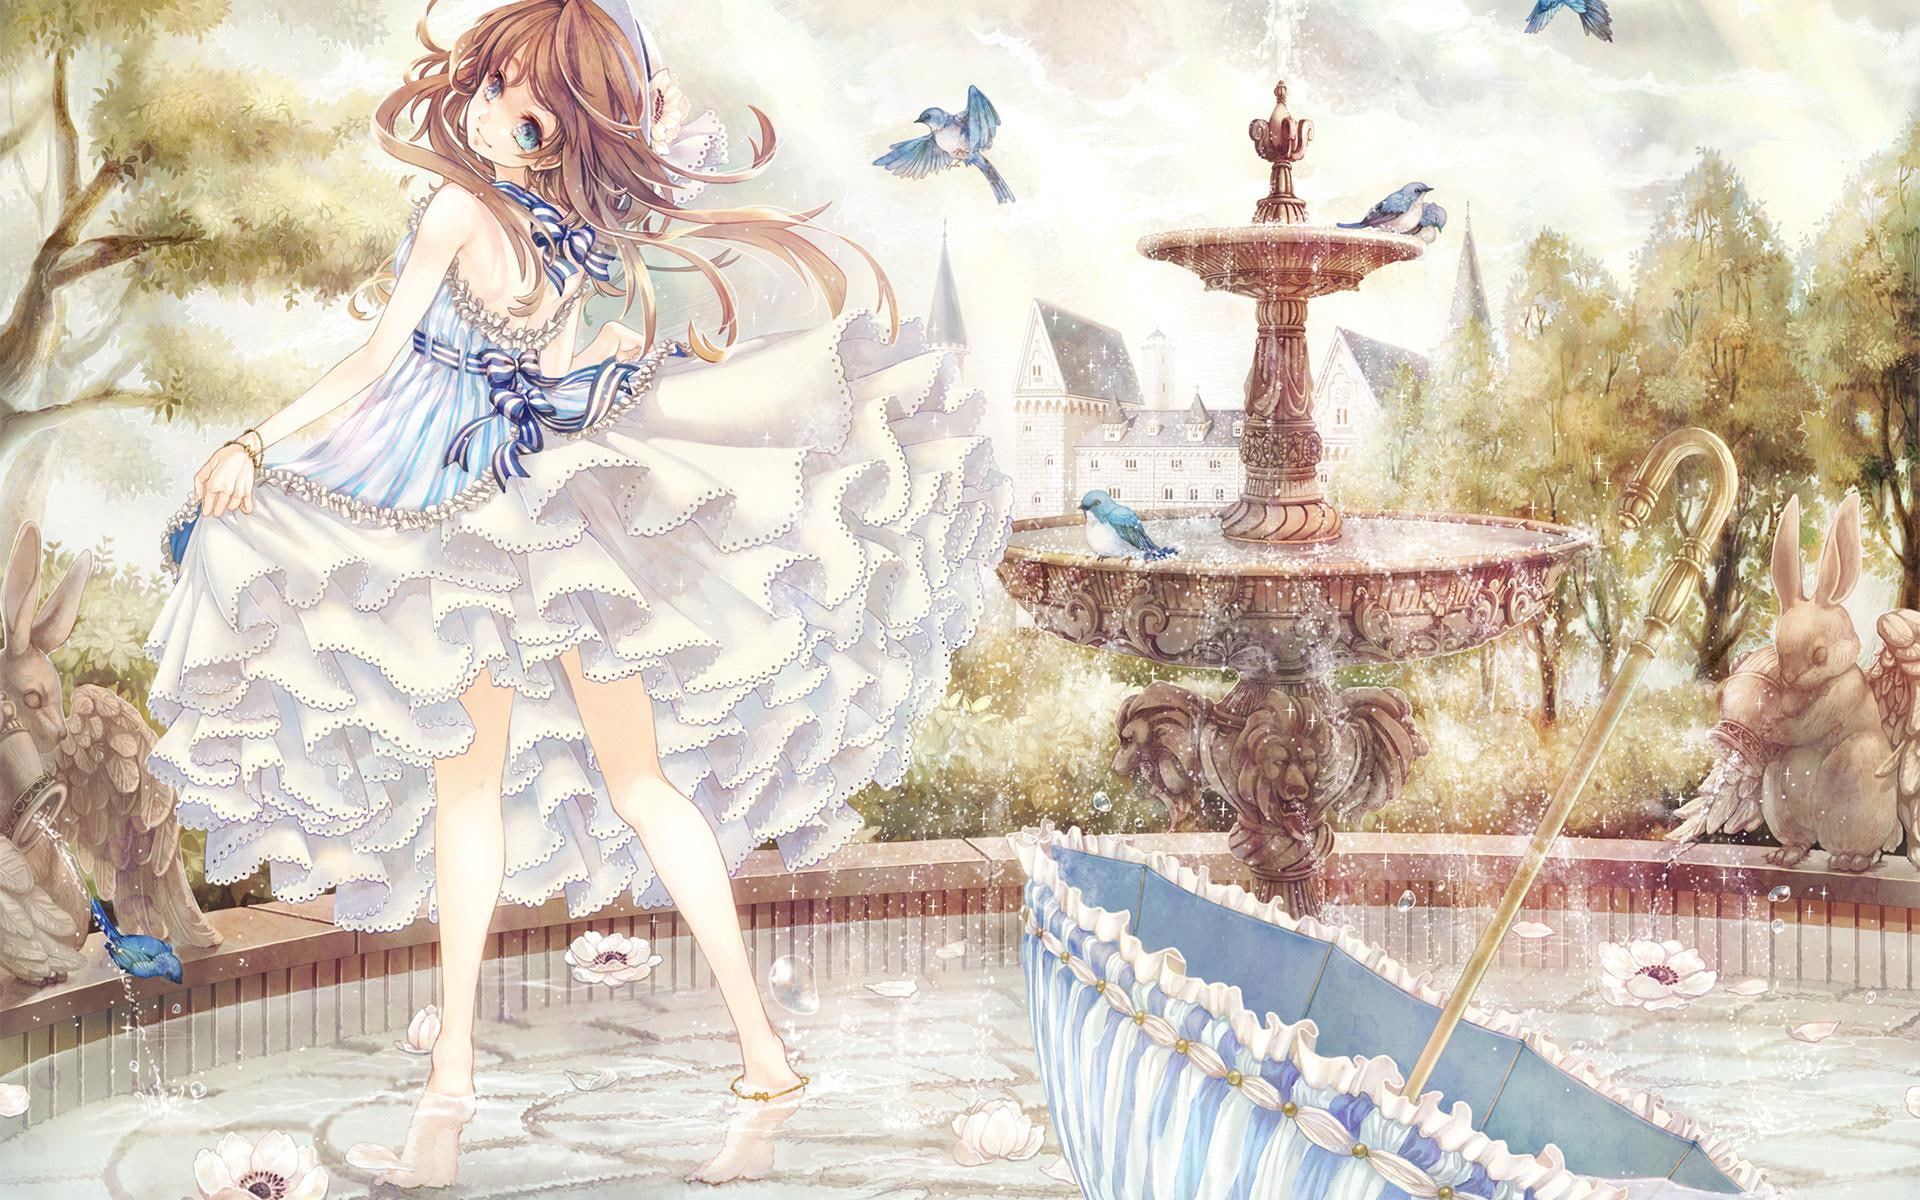 Anime girl, Fountain, Rabbit, Secret Garden, ACG, female anime character with brown hair